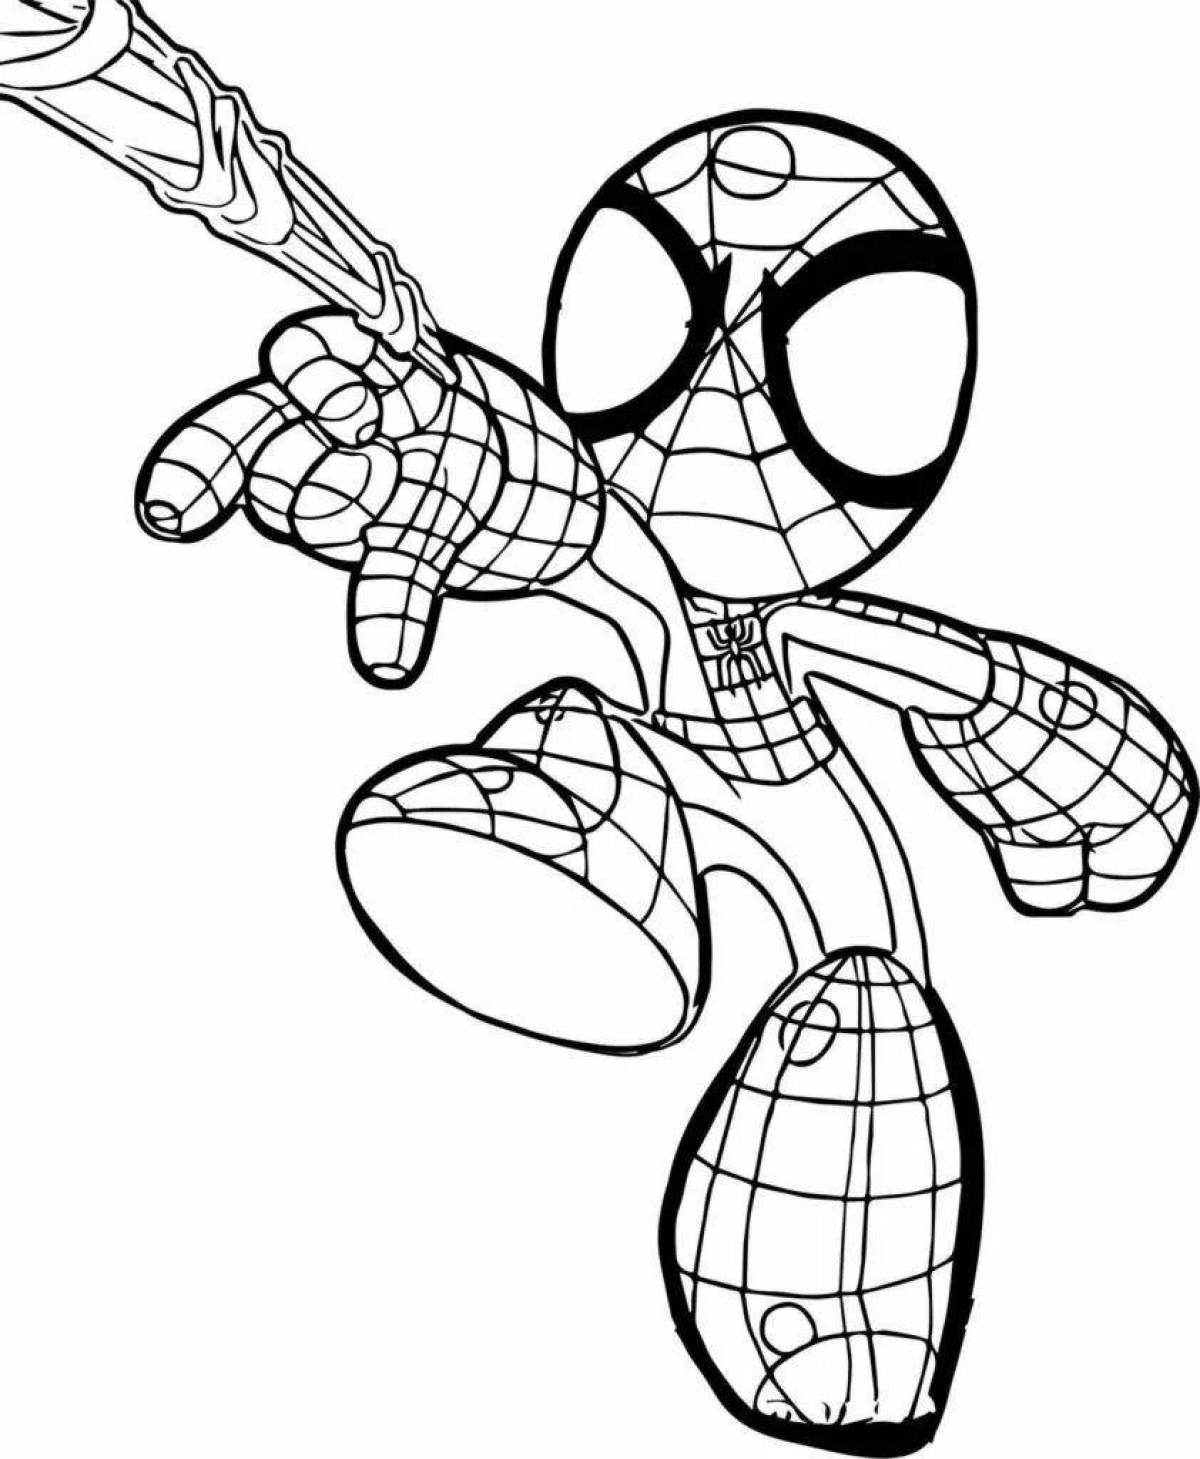 Cheerful little spiderman